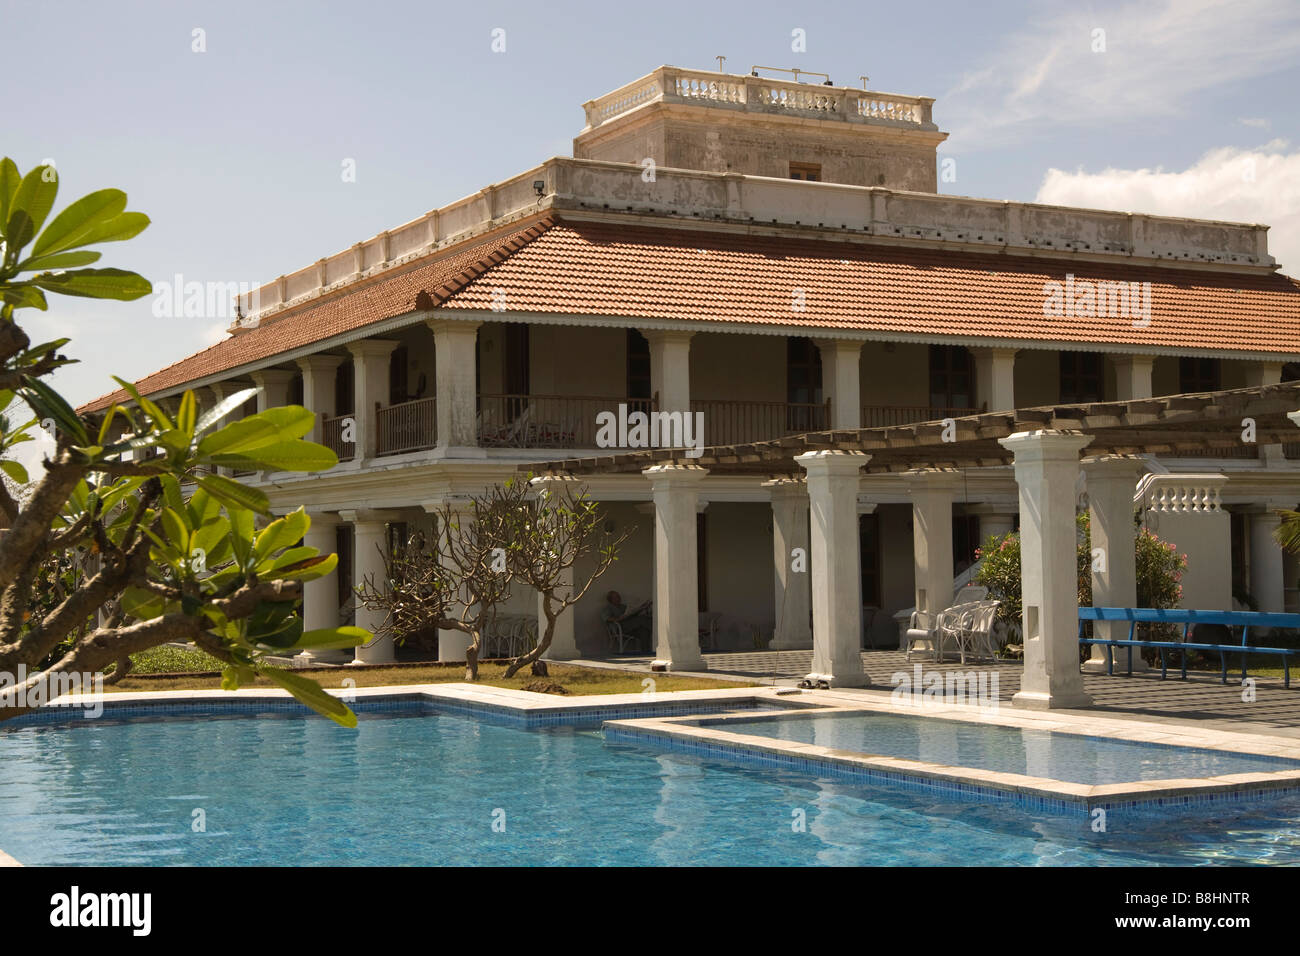 Indien Tamil Nadu Tranquebar Tharangambadi Bungalow am Strand Erbe Hotelschwimmbad Stockfoto